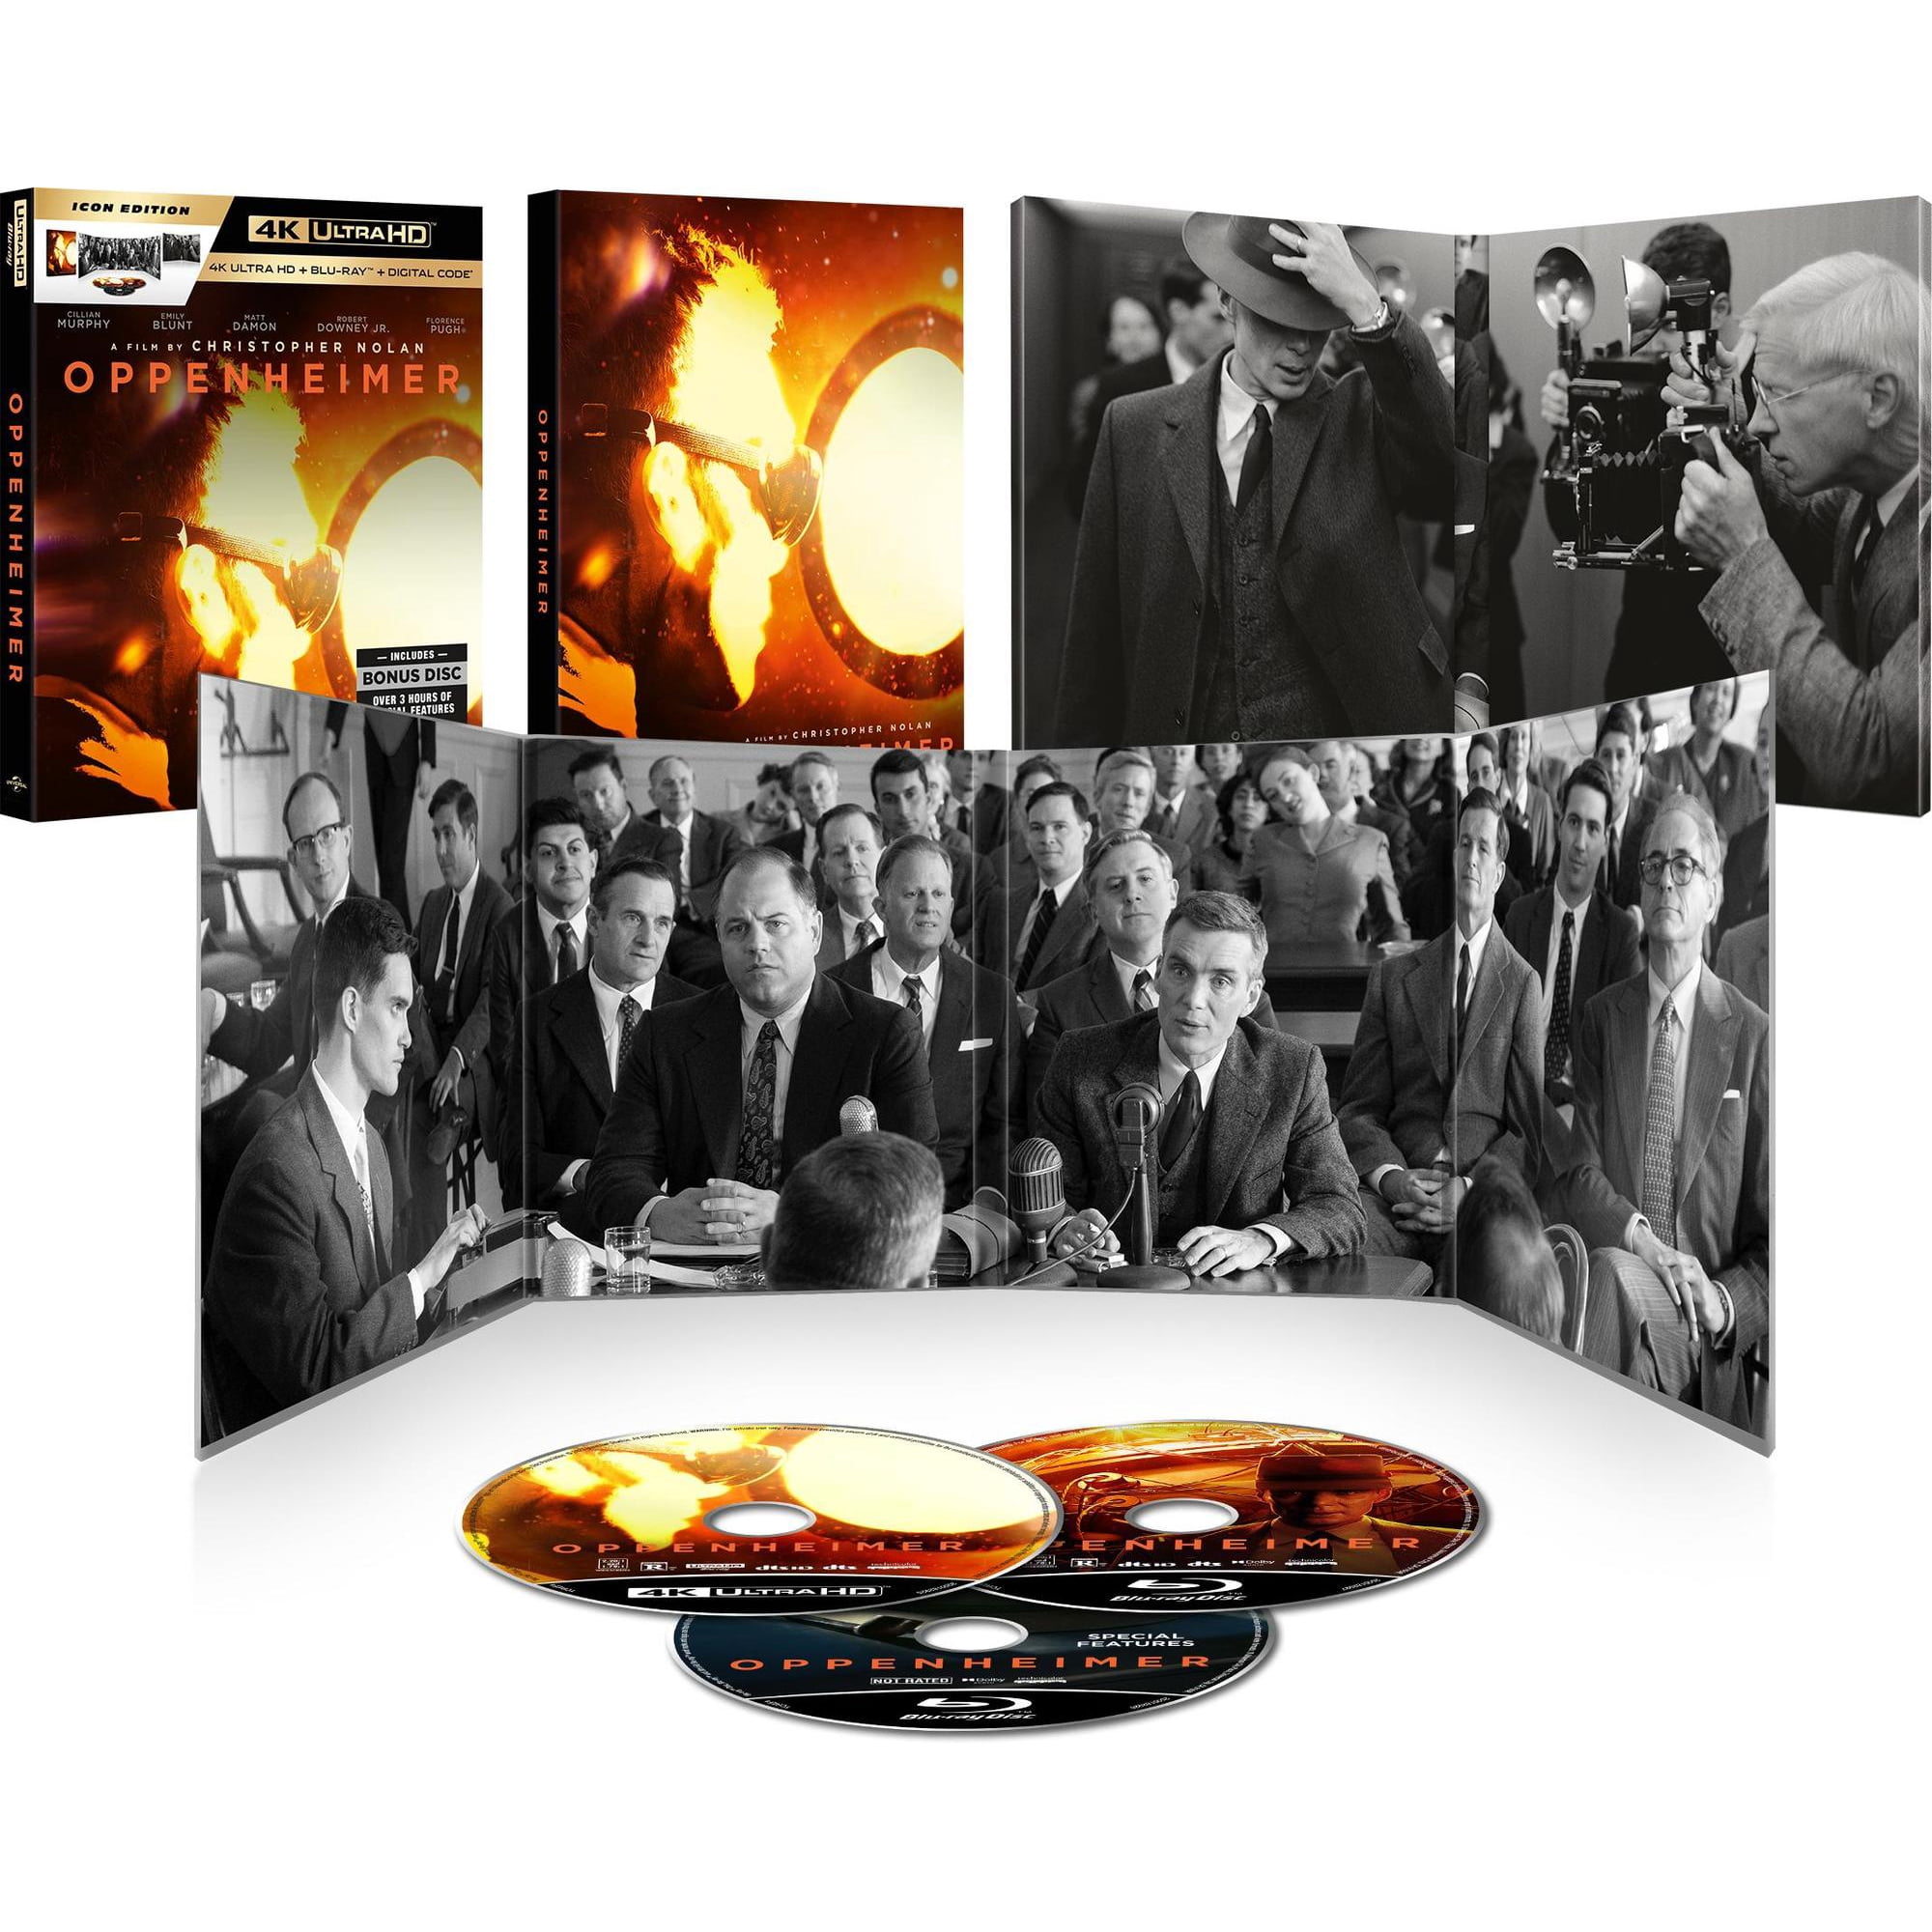 Oppenheimer-Icon-Edition-Walmart-Exclusive-4K-UHD-Blu-ray-Digital-Copy_51427dc2-0145-4ce6-941a-71f6b19889d8.429ad4d3335c89e30615b8275e3e8717.jpeg